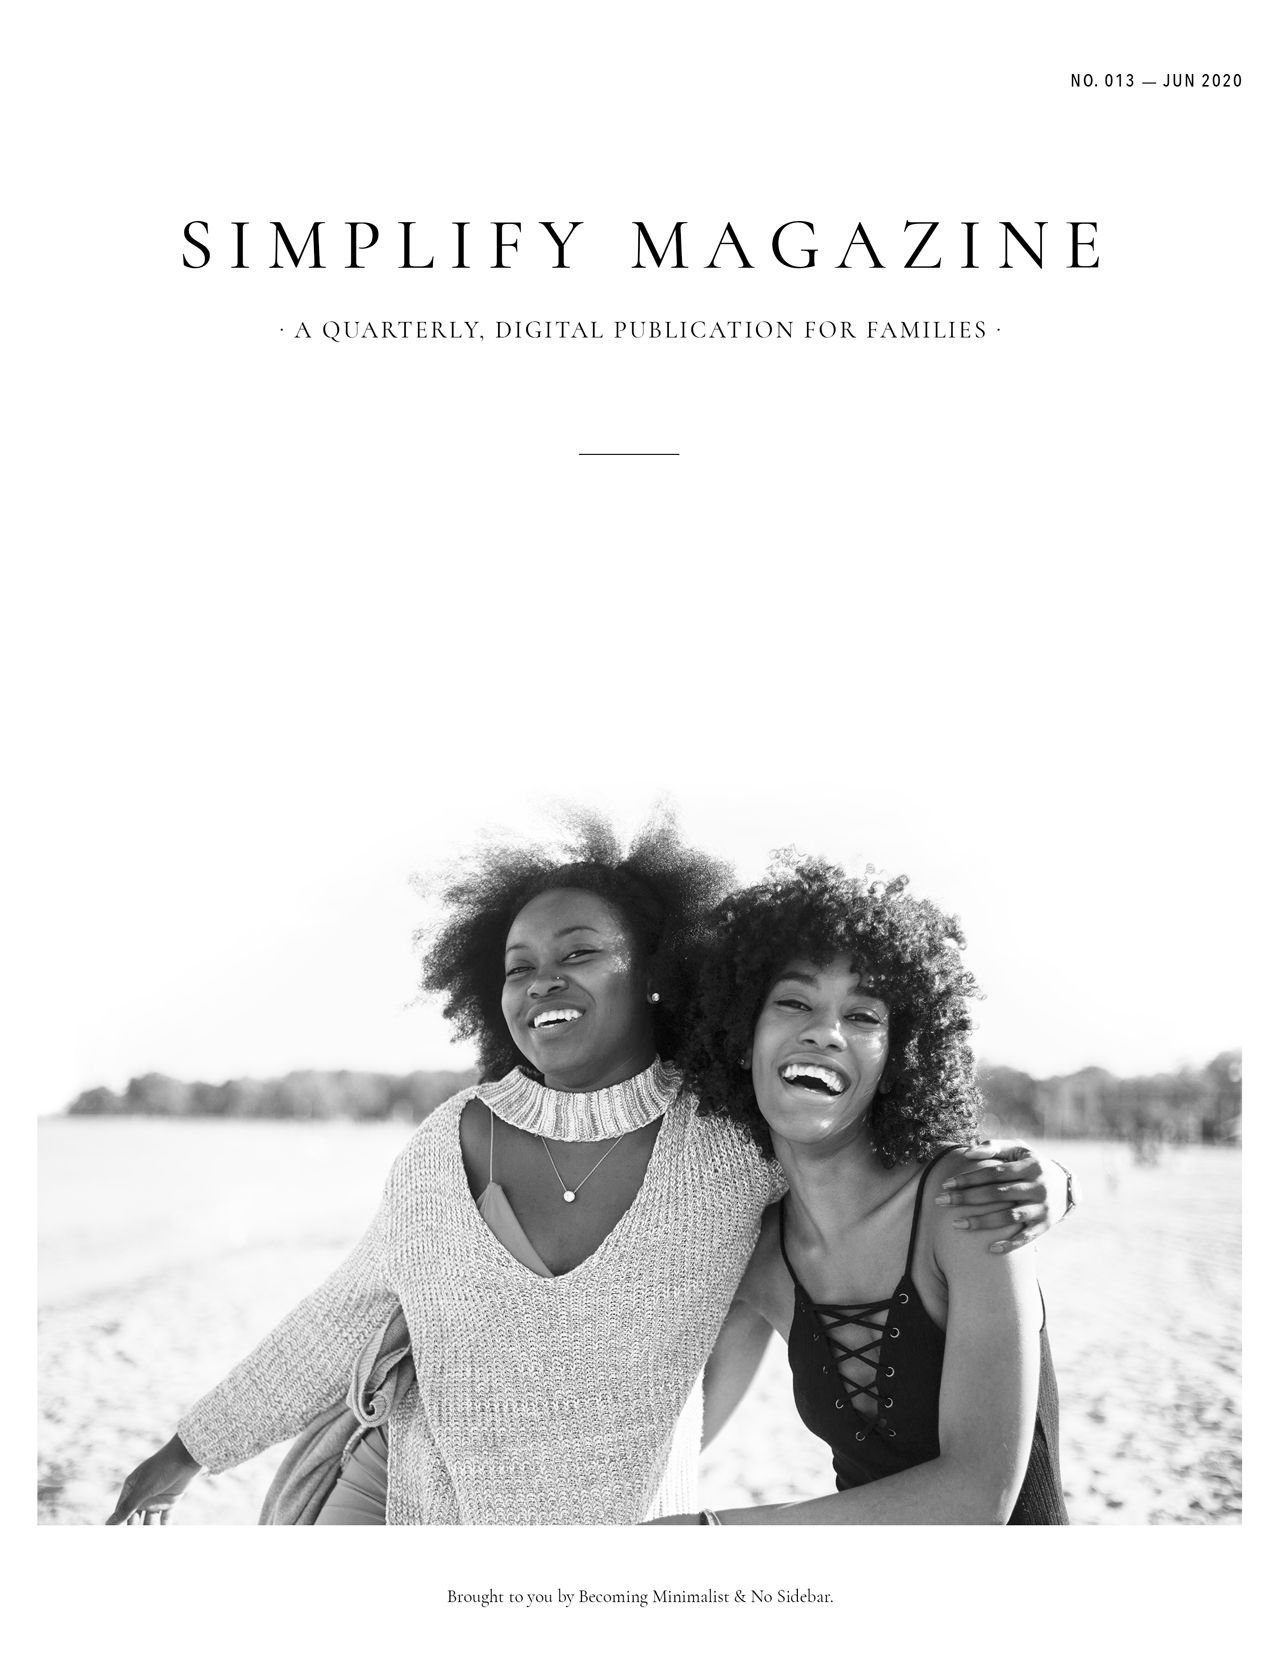 Simplify Magazine Issue #013